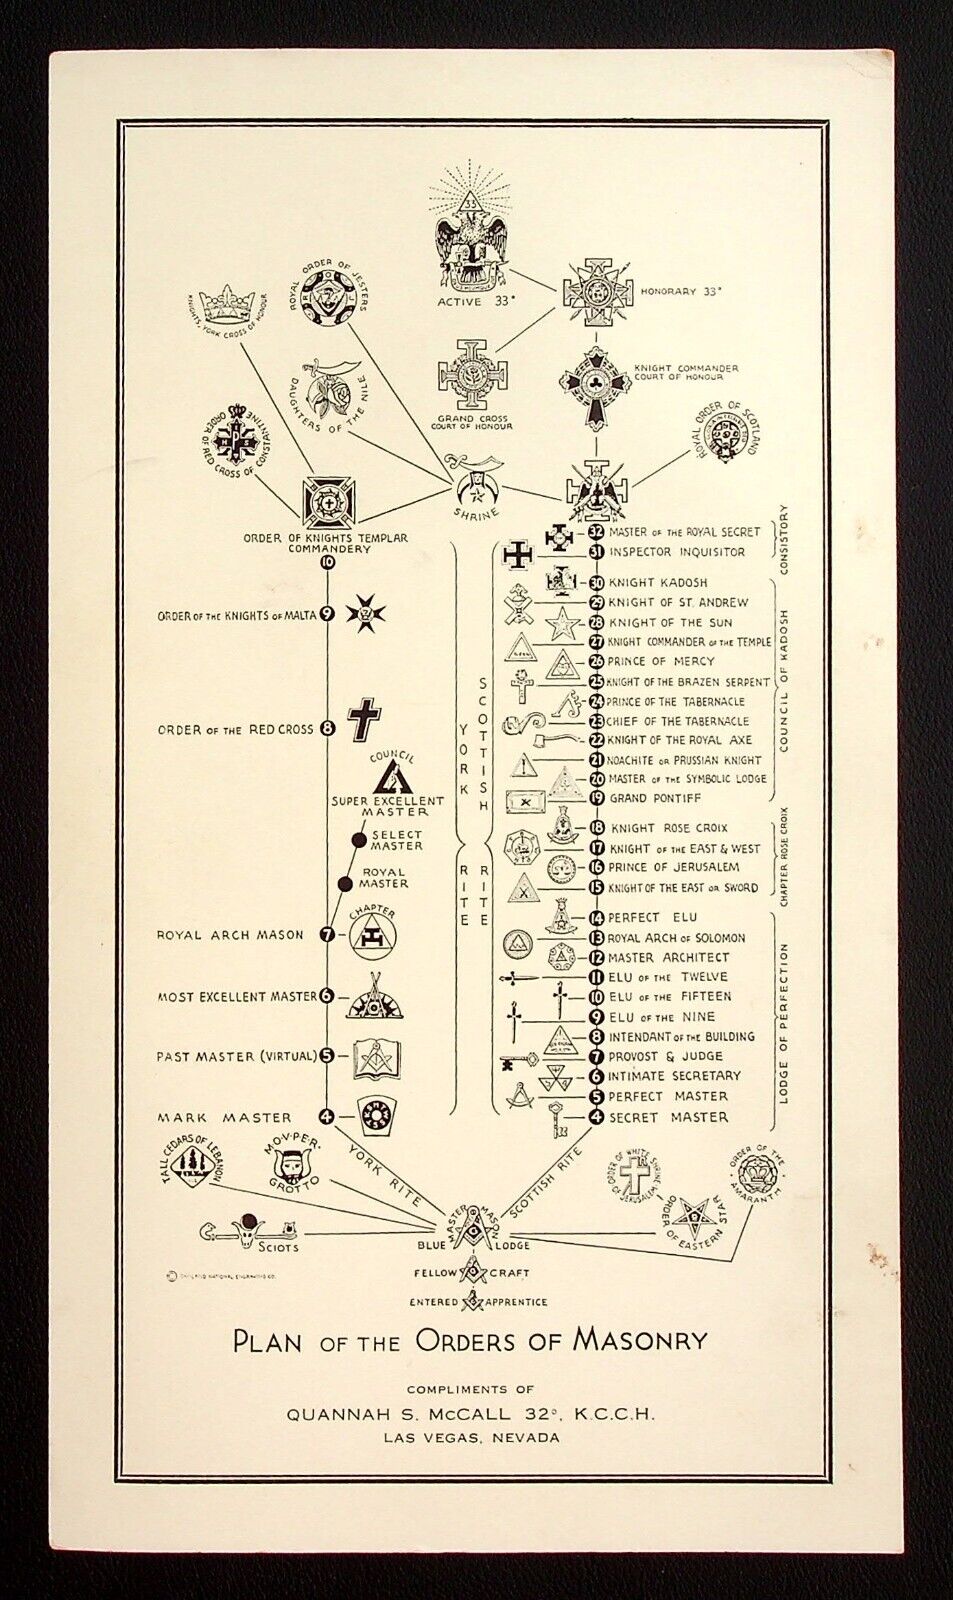 Plan of the Orders of Masonry Freemasons Masonic Chart Masters 1940s 50s Symbols